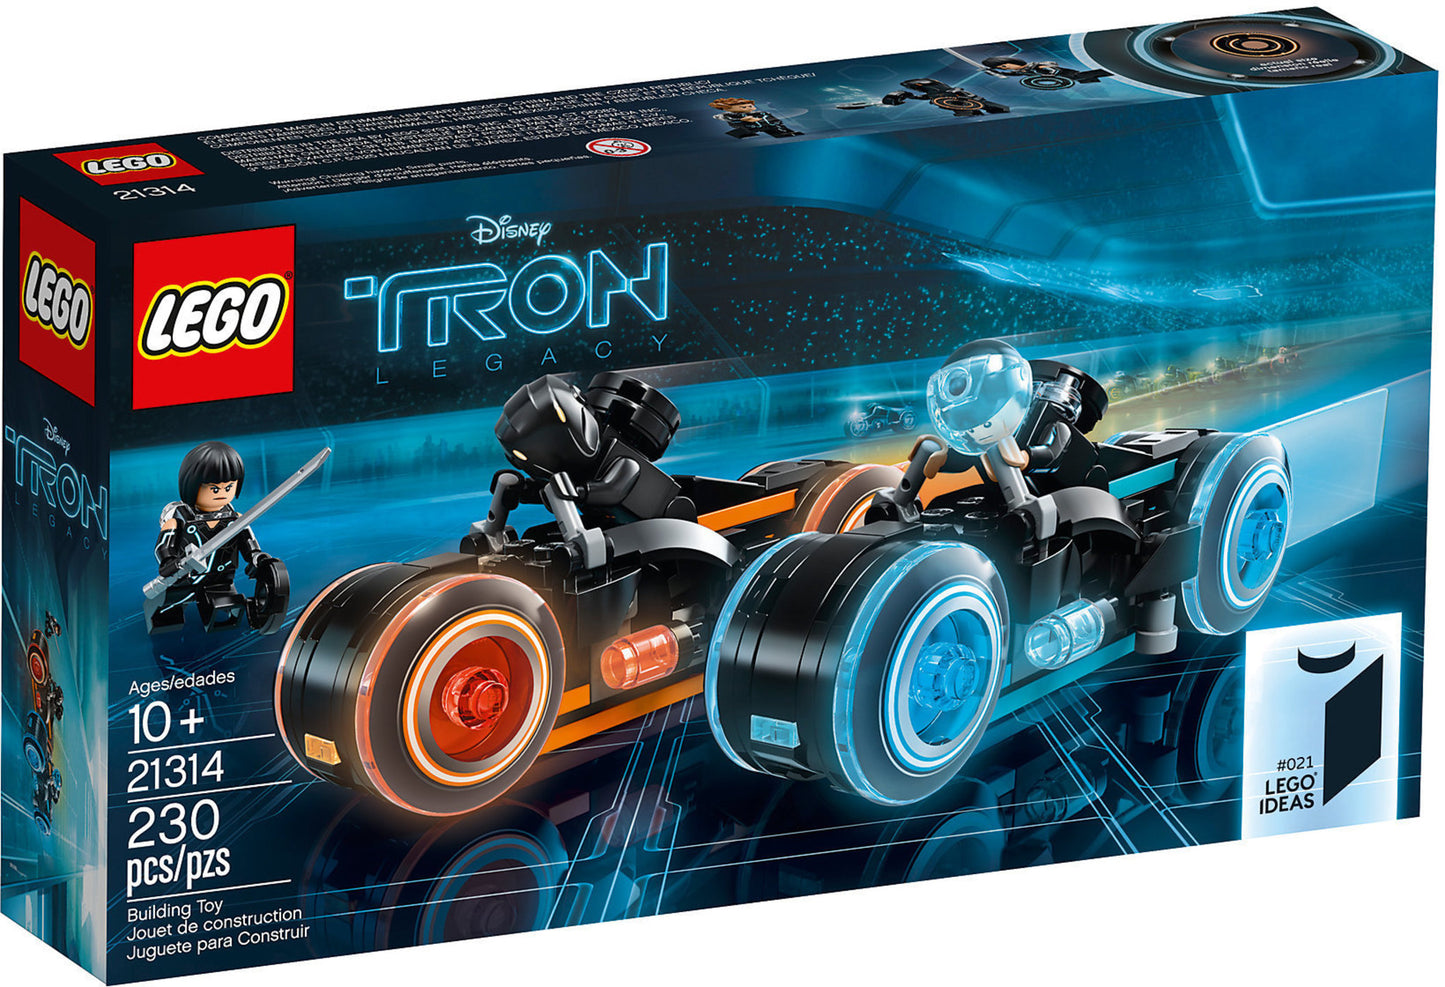 21314 LEGO Ideas - Tron: Legacy